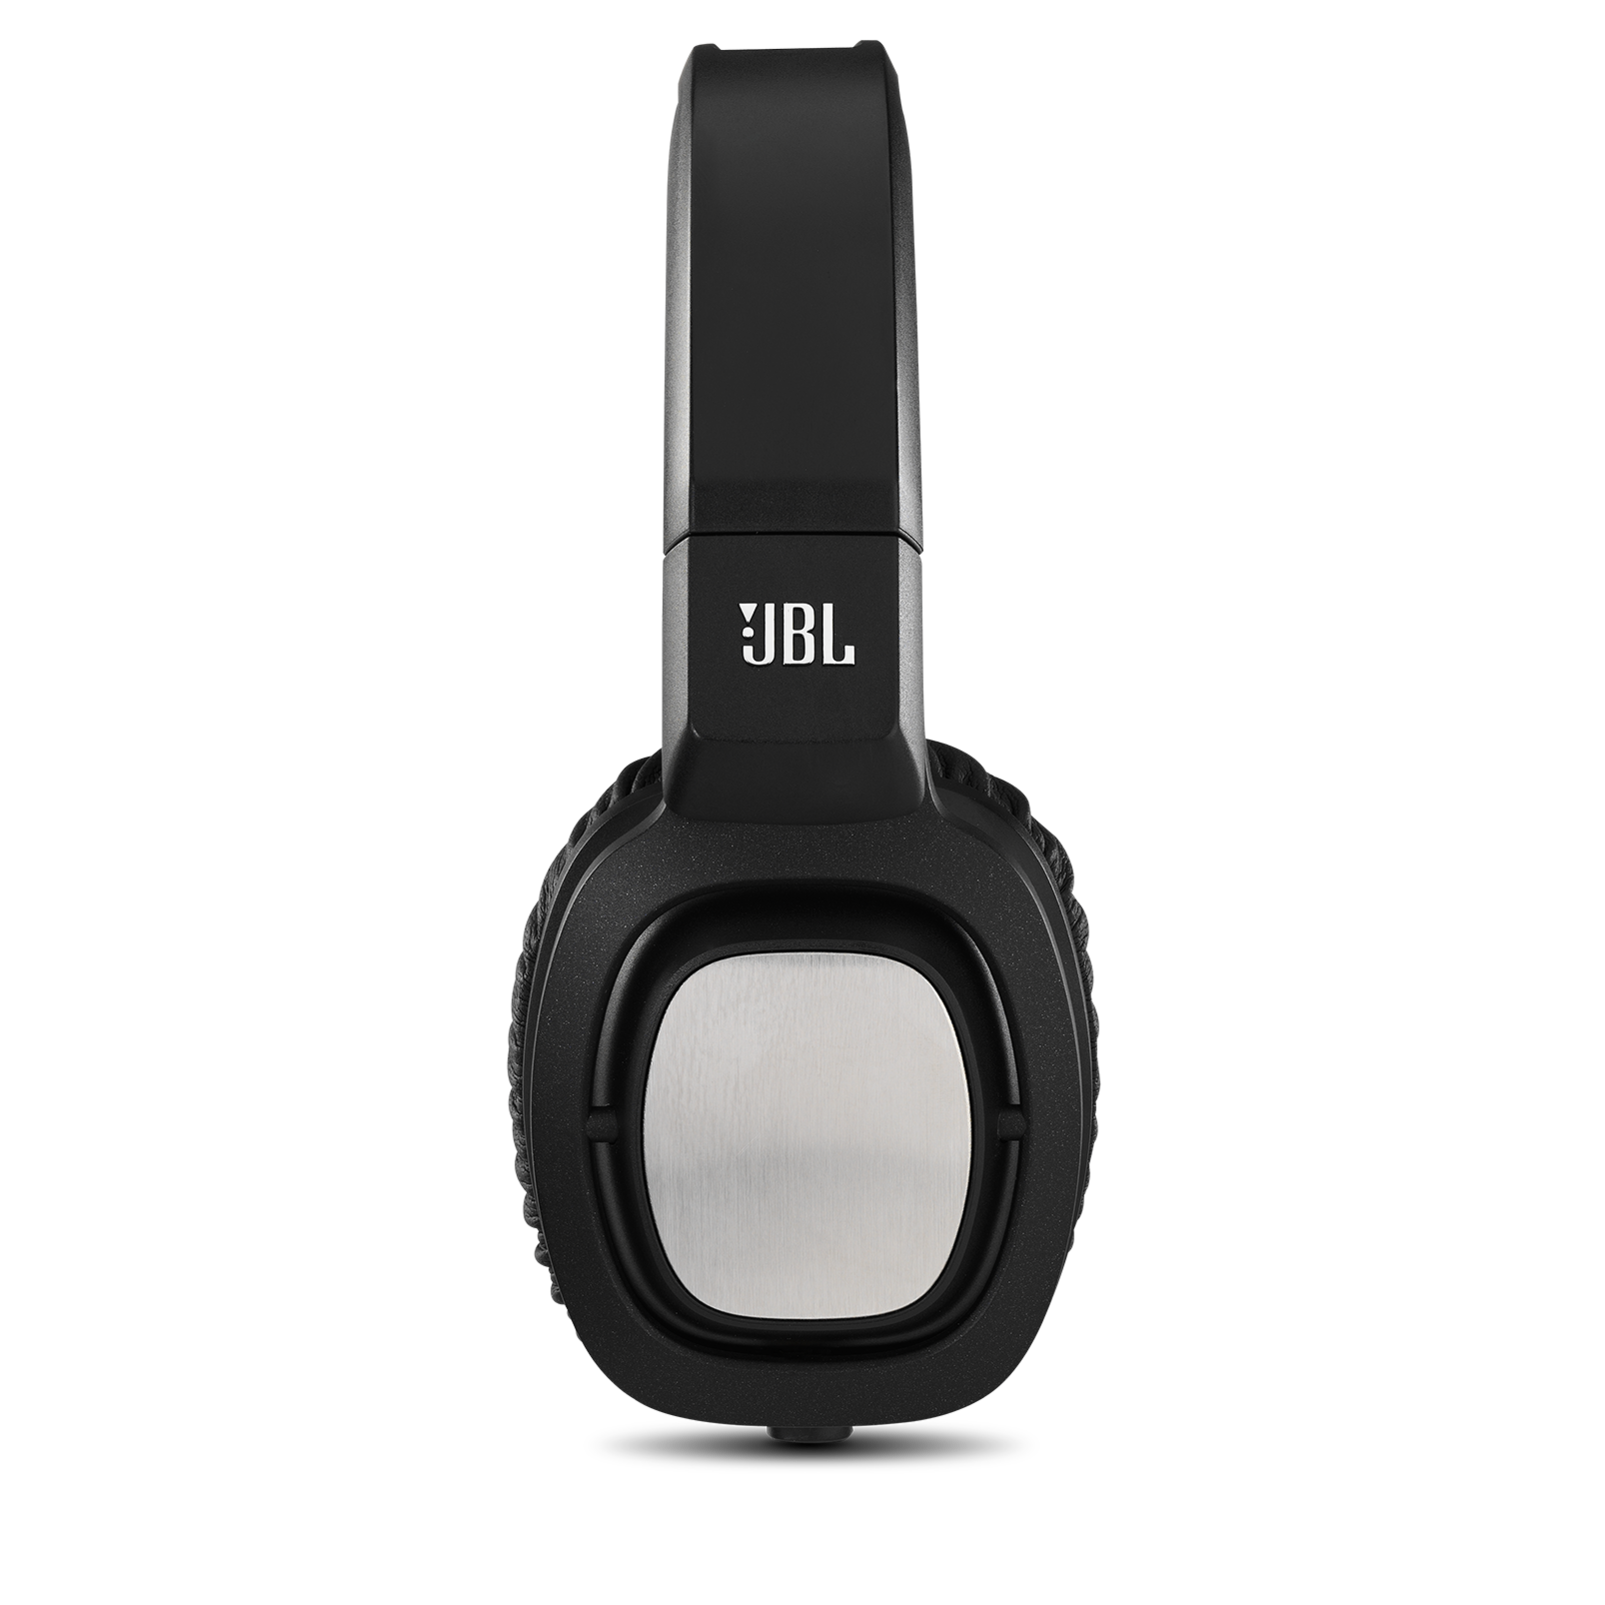 J55 - Black - High-performance On-Ear Headphones with Rotatable Ear-cups - Detailshot 2